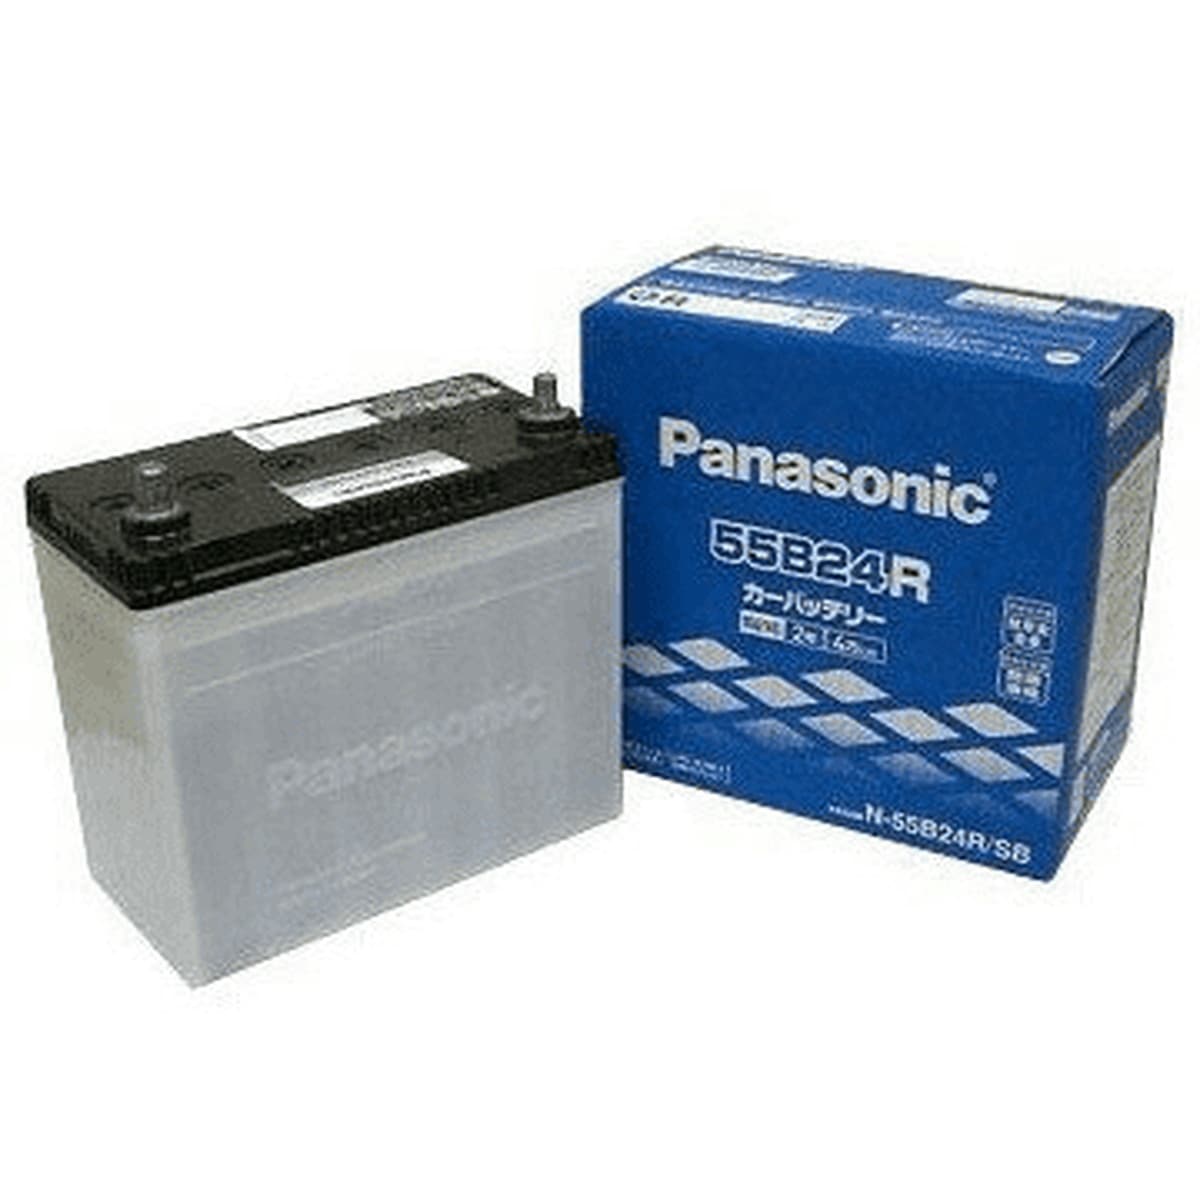 Panasonic N-60B19L/C8 ミツビシ eKクラッシィ 搭載(42B19L) PANASONIC カオス ブルーバッテリー 送料無料